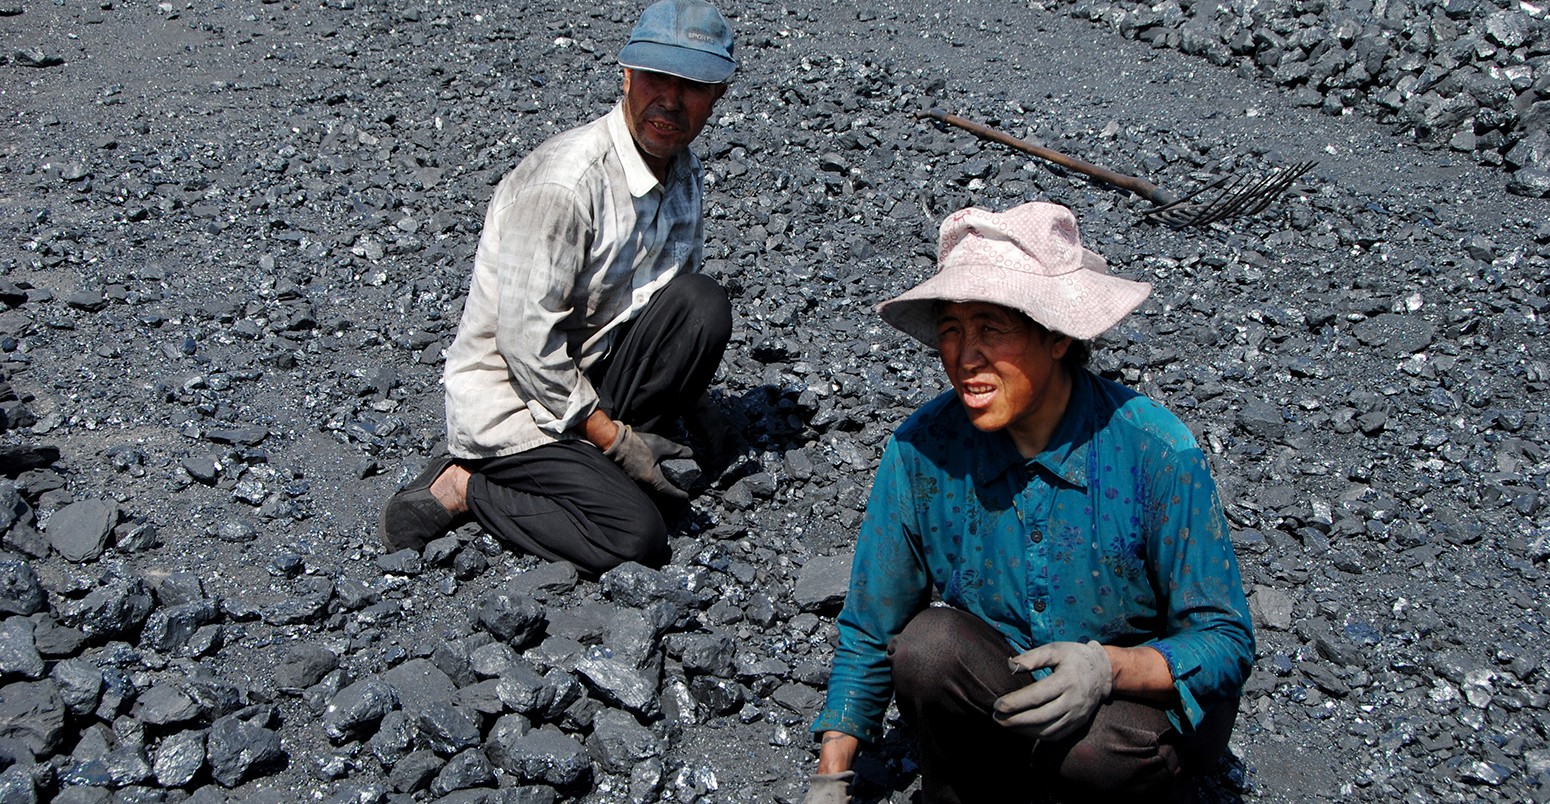 Coal workers in Shizuishan, China